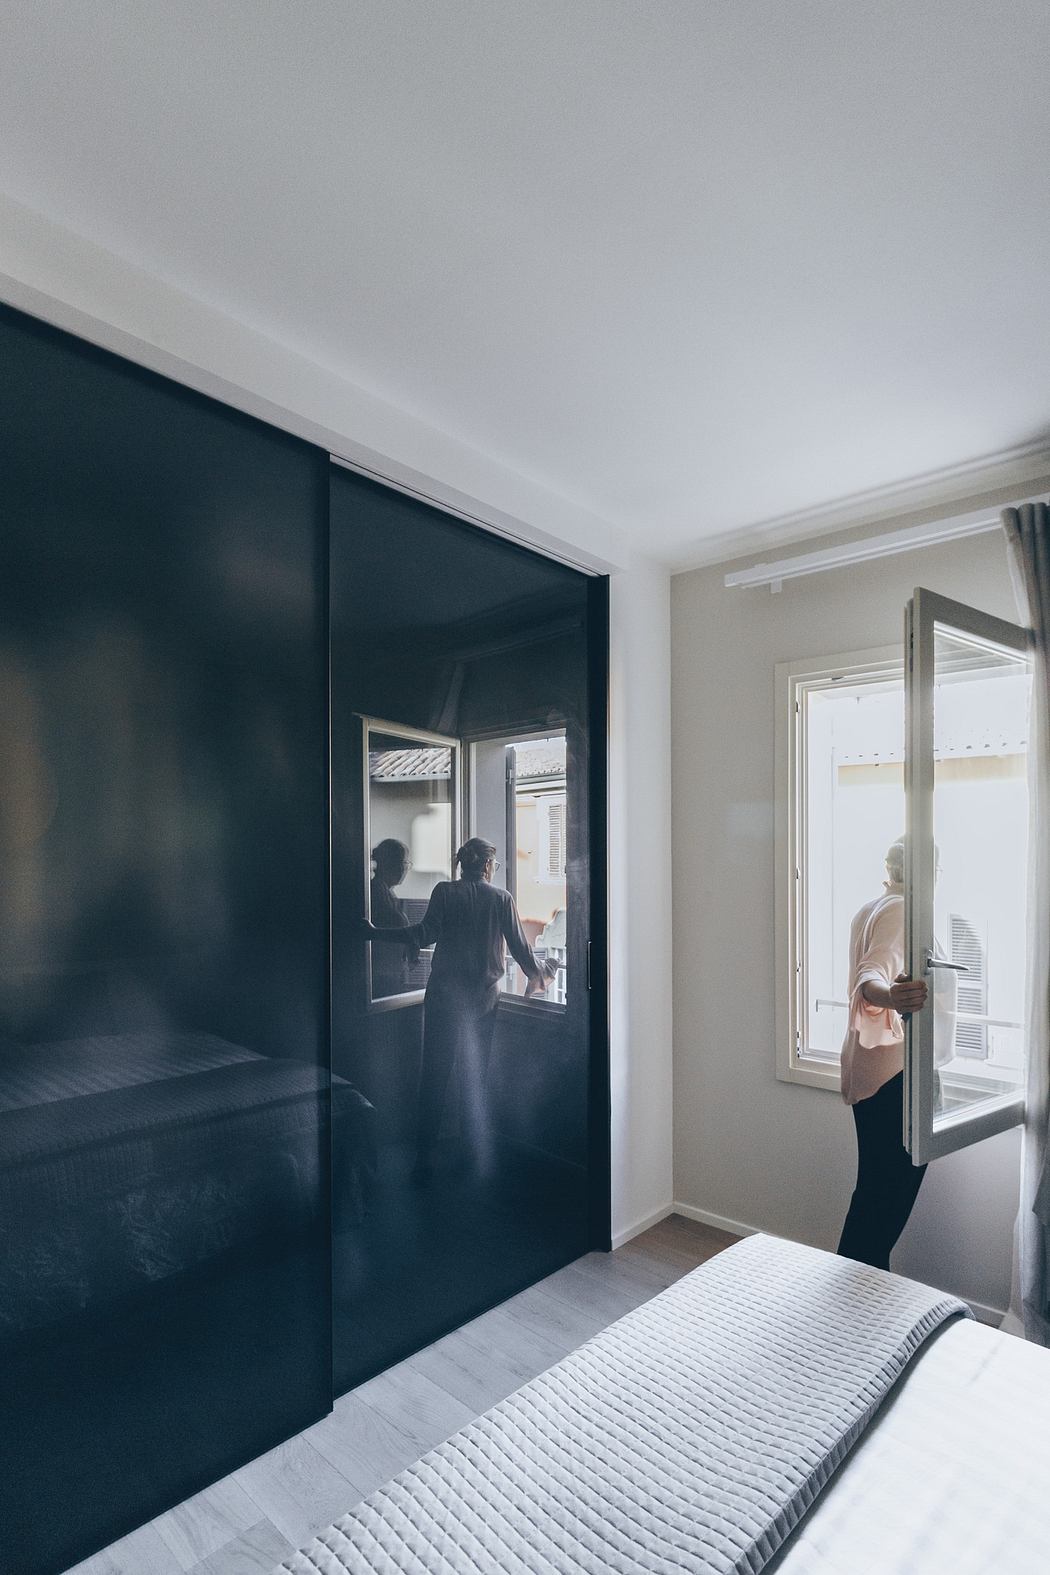 Sleek bedroom with black sliding door and person by window.